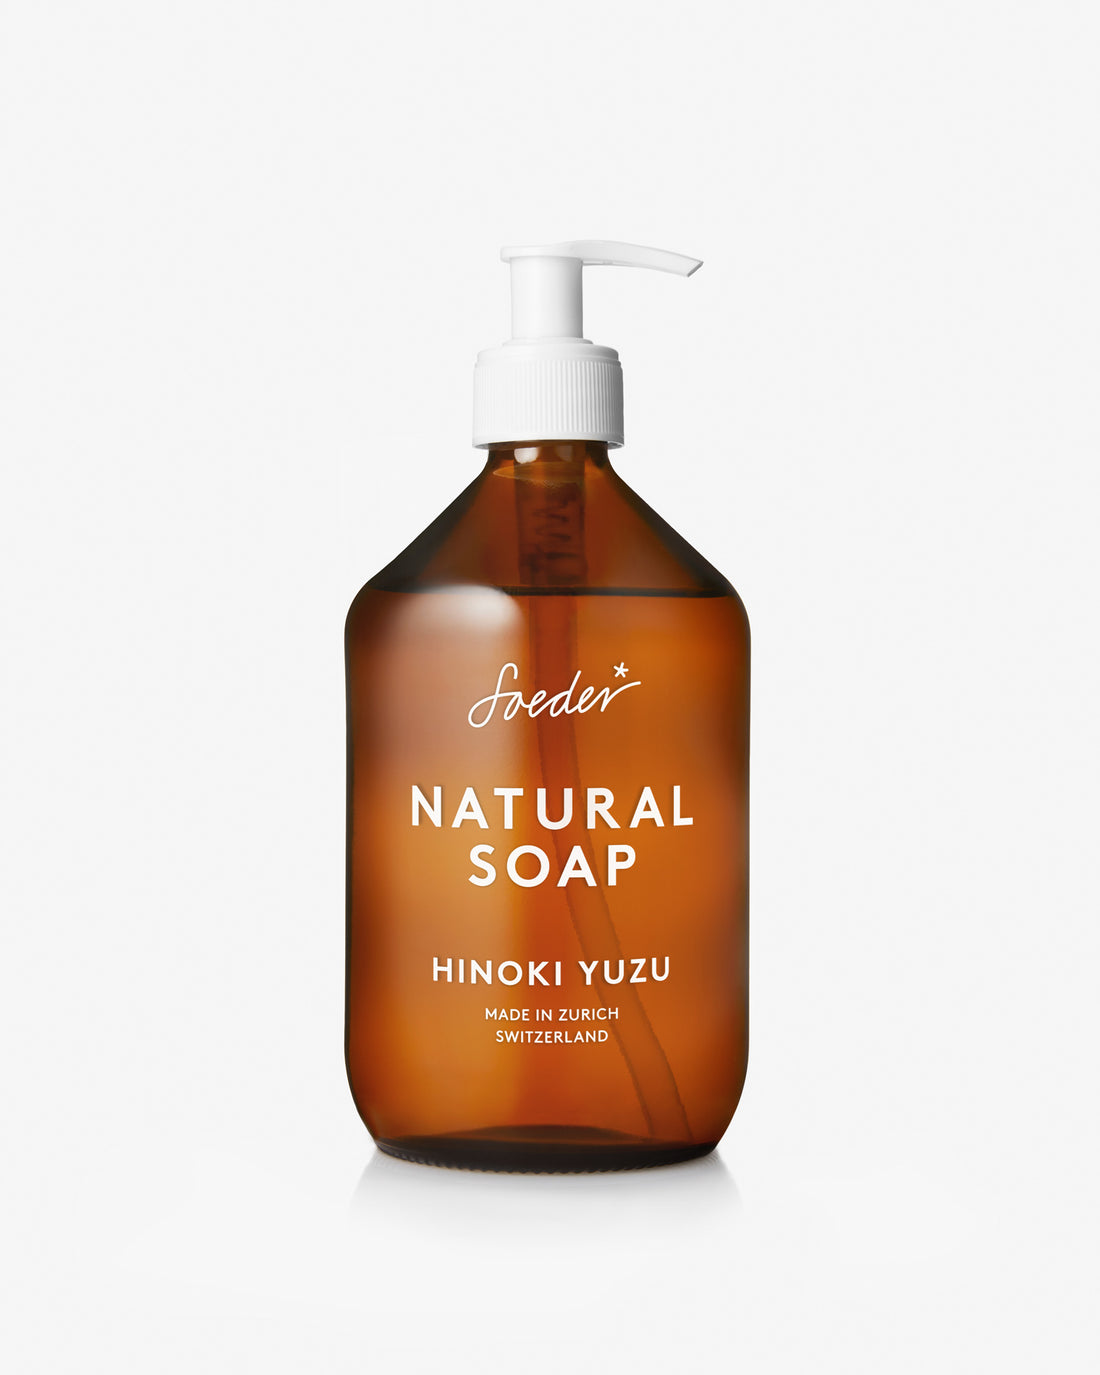 NATURAL SOAP HINOKI YUZU - Soeder